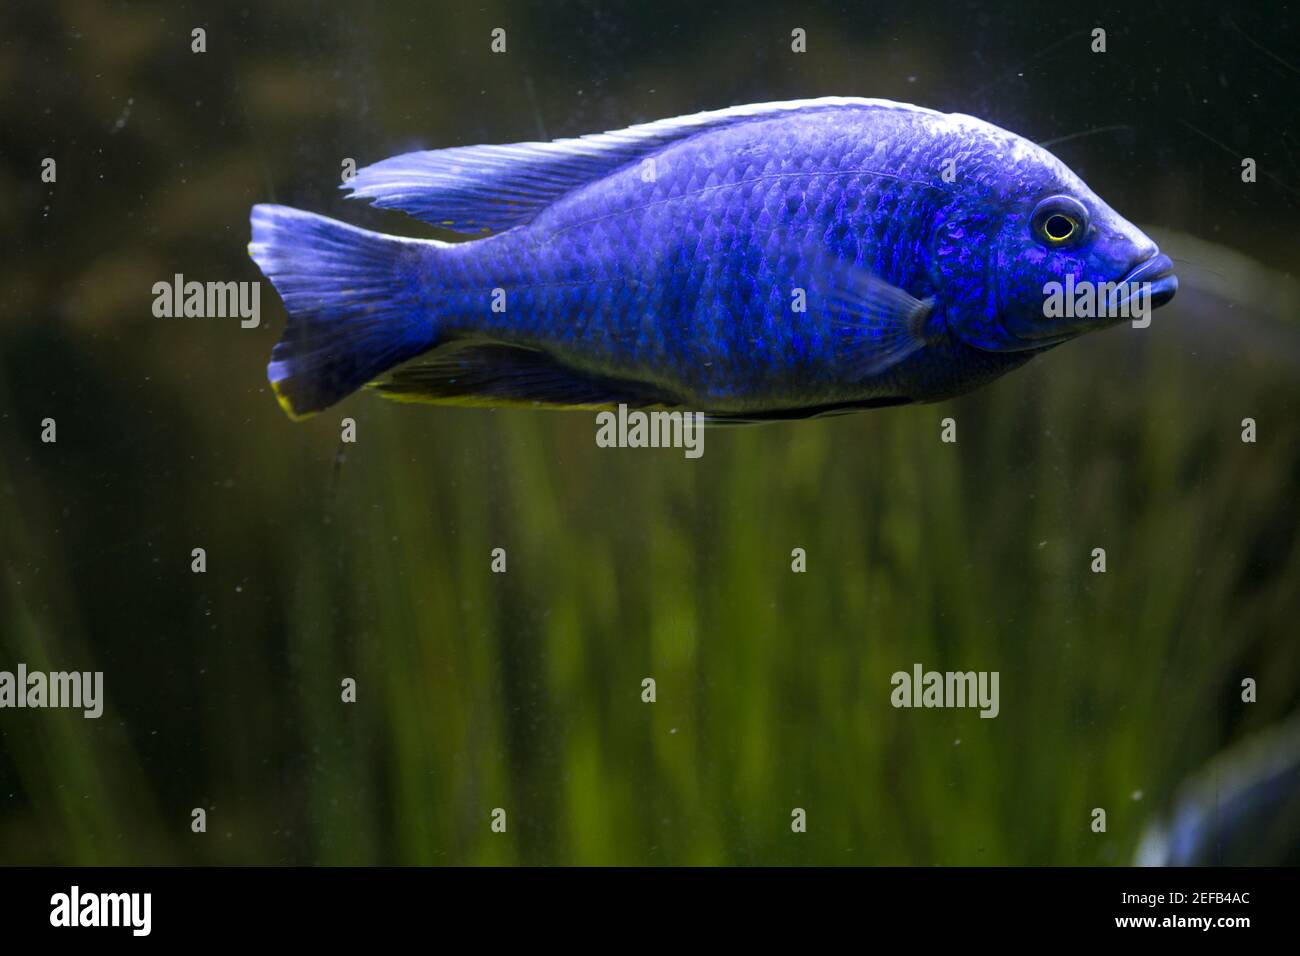 Sciaenochromis ahli in zoo. Cichlid wild fish macro photography. Stock Photo